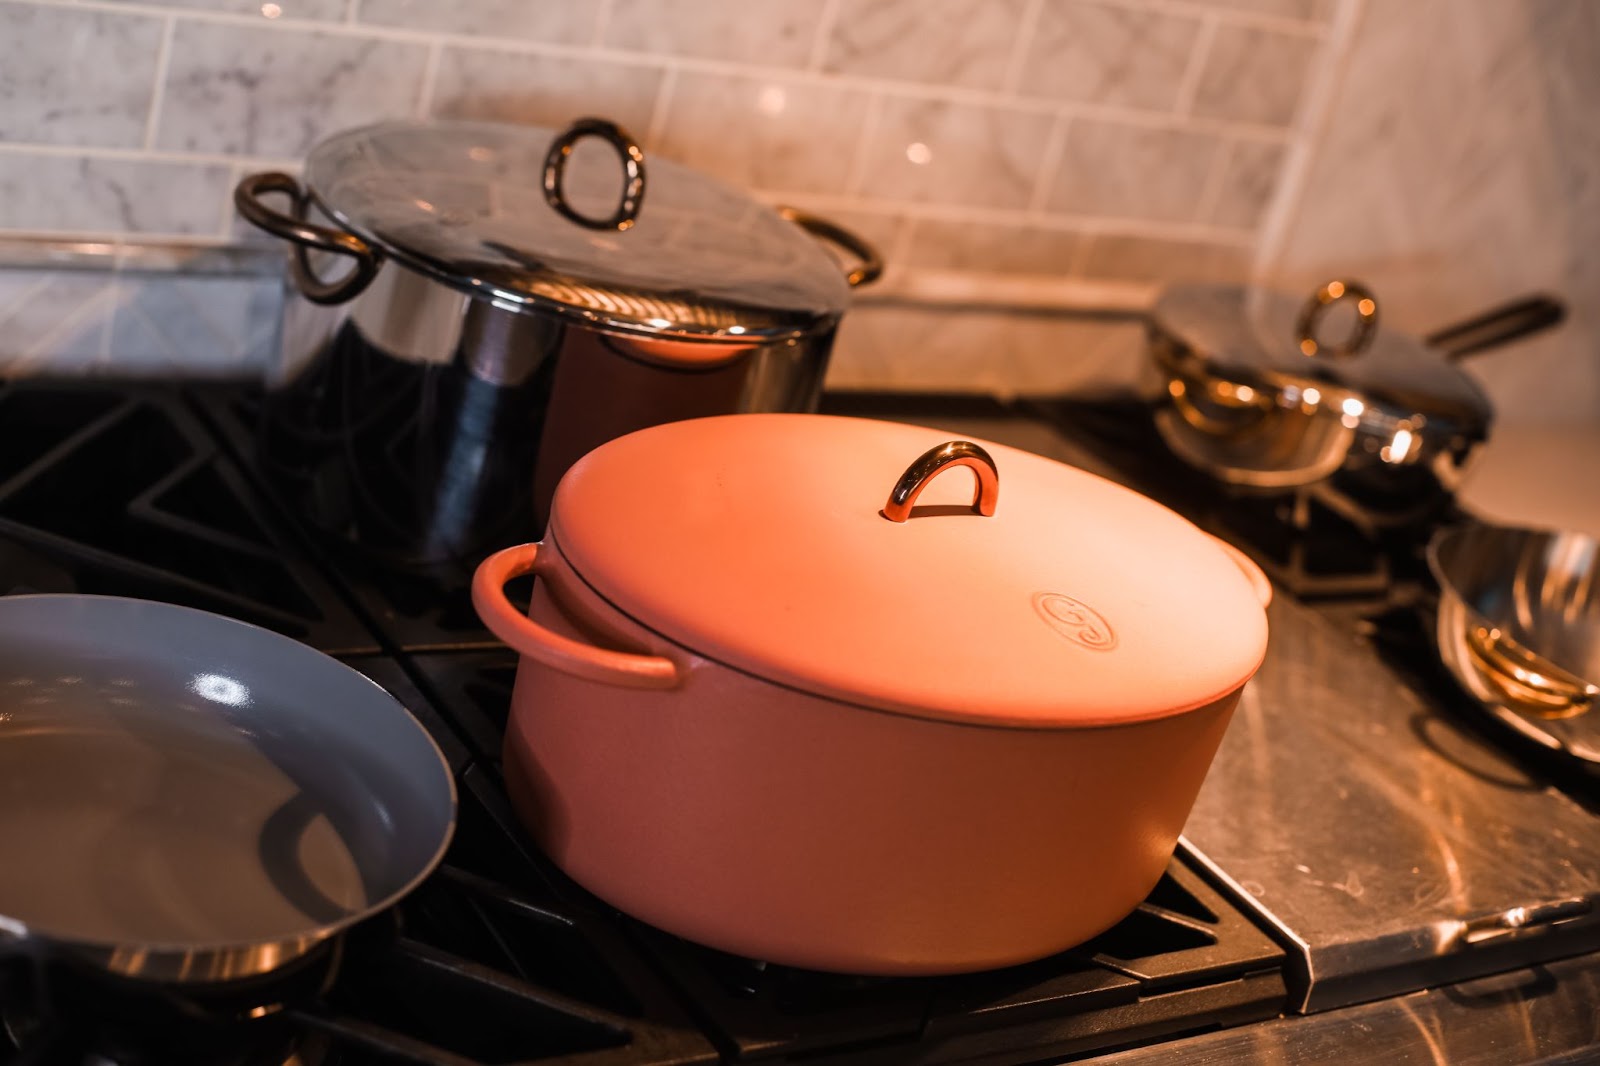 Family Style: 5 Piece Cookware Set - Essential Pots & Pans, Great Jones